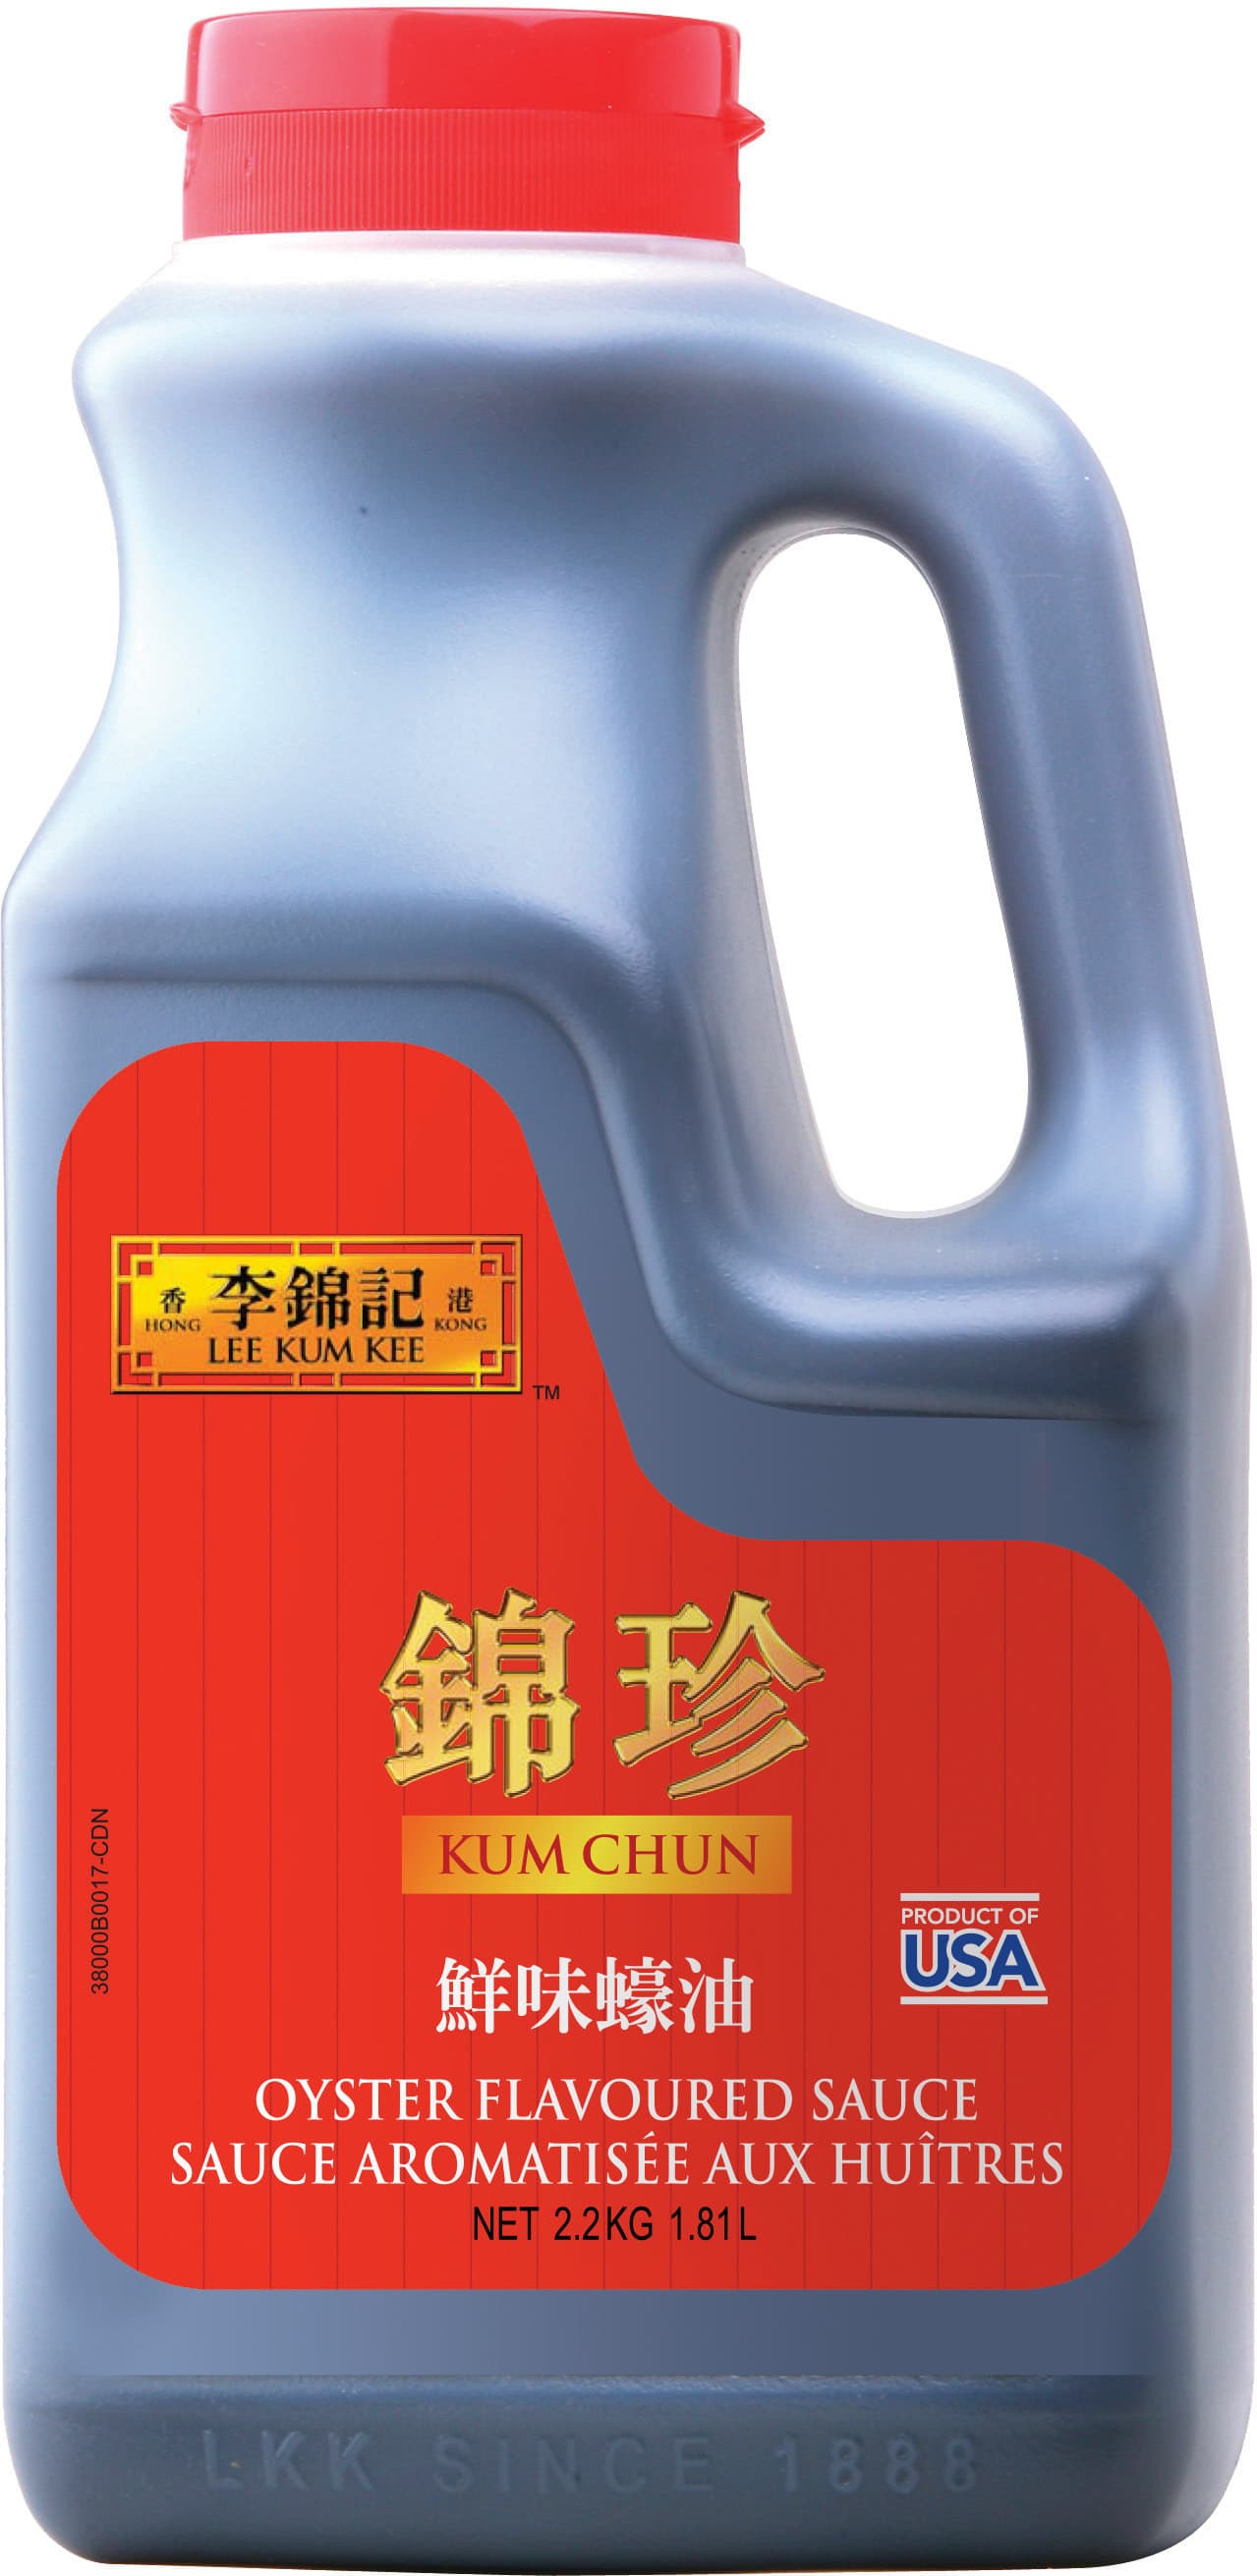 Kum Chun Oyster Flavoured Sauce 2.2kg 